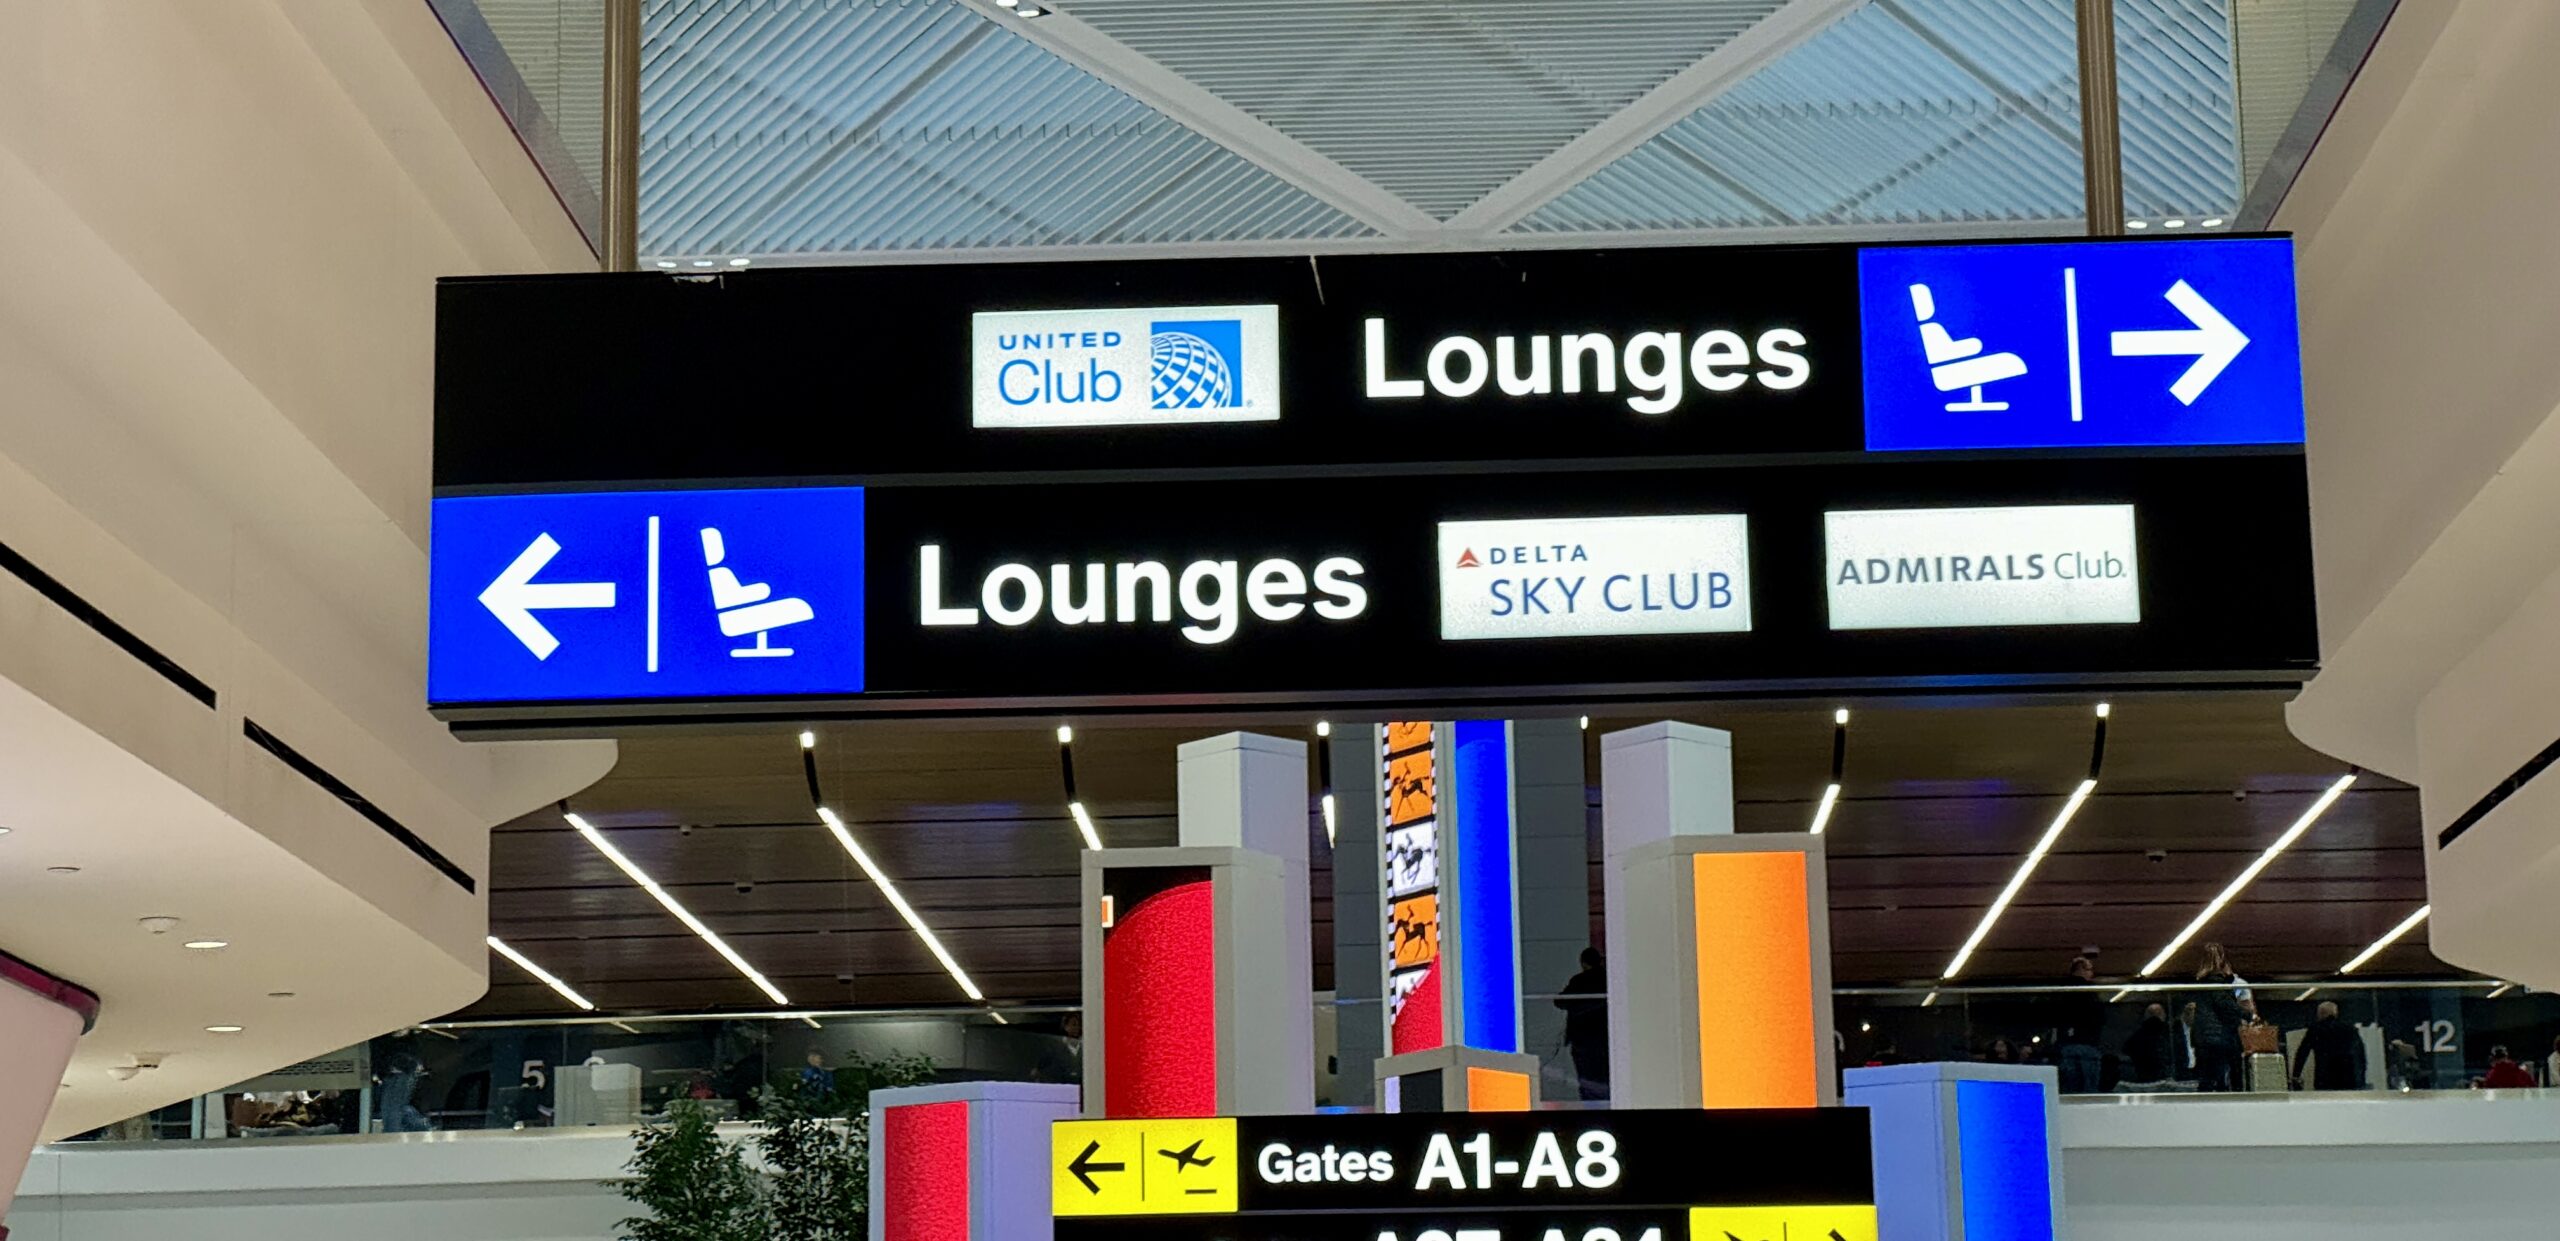 EWR Terminal A Lounge Signs